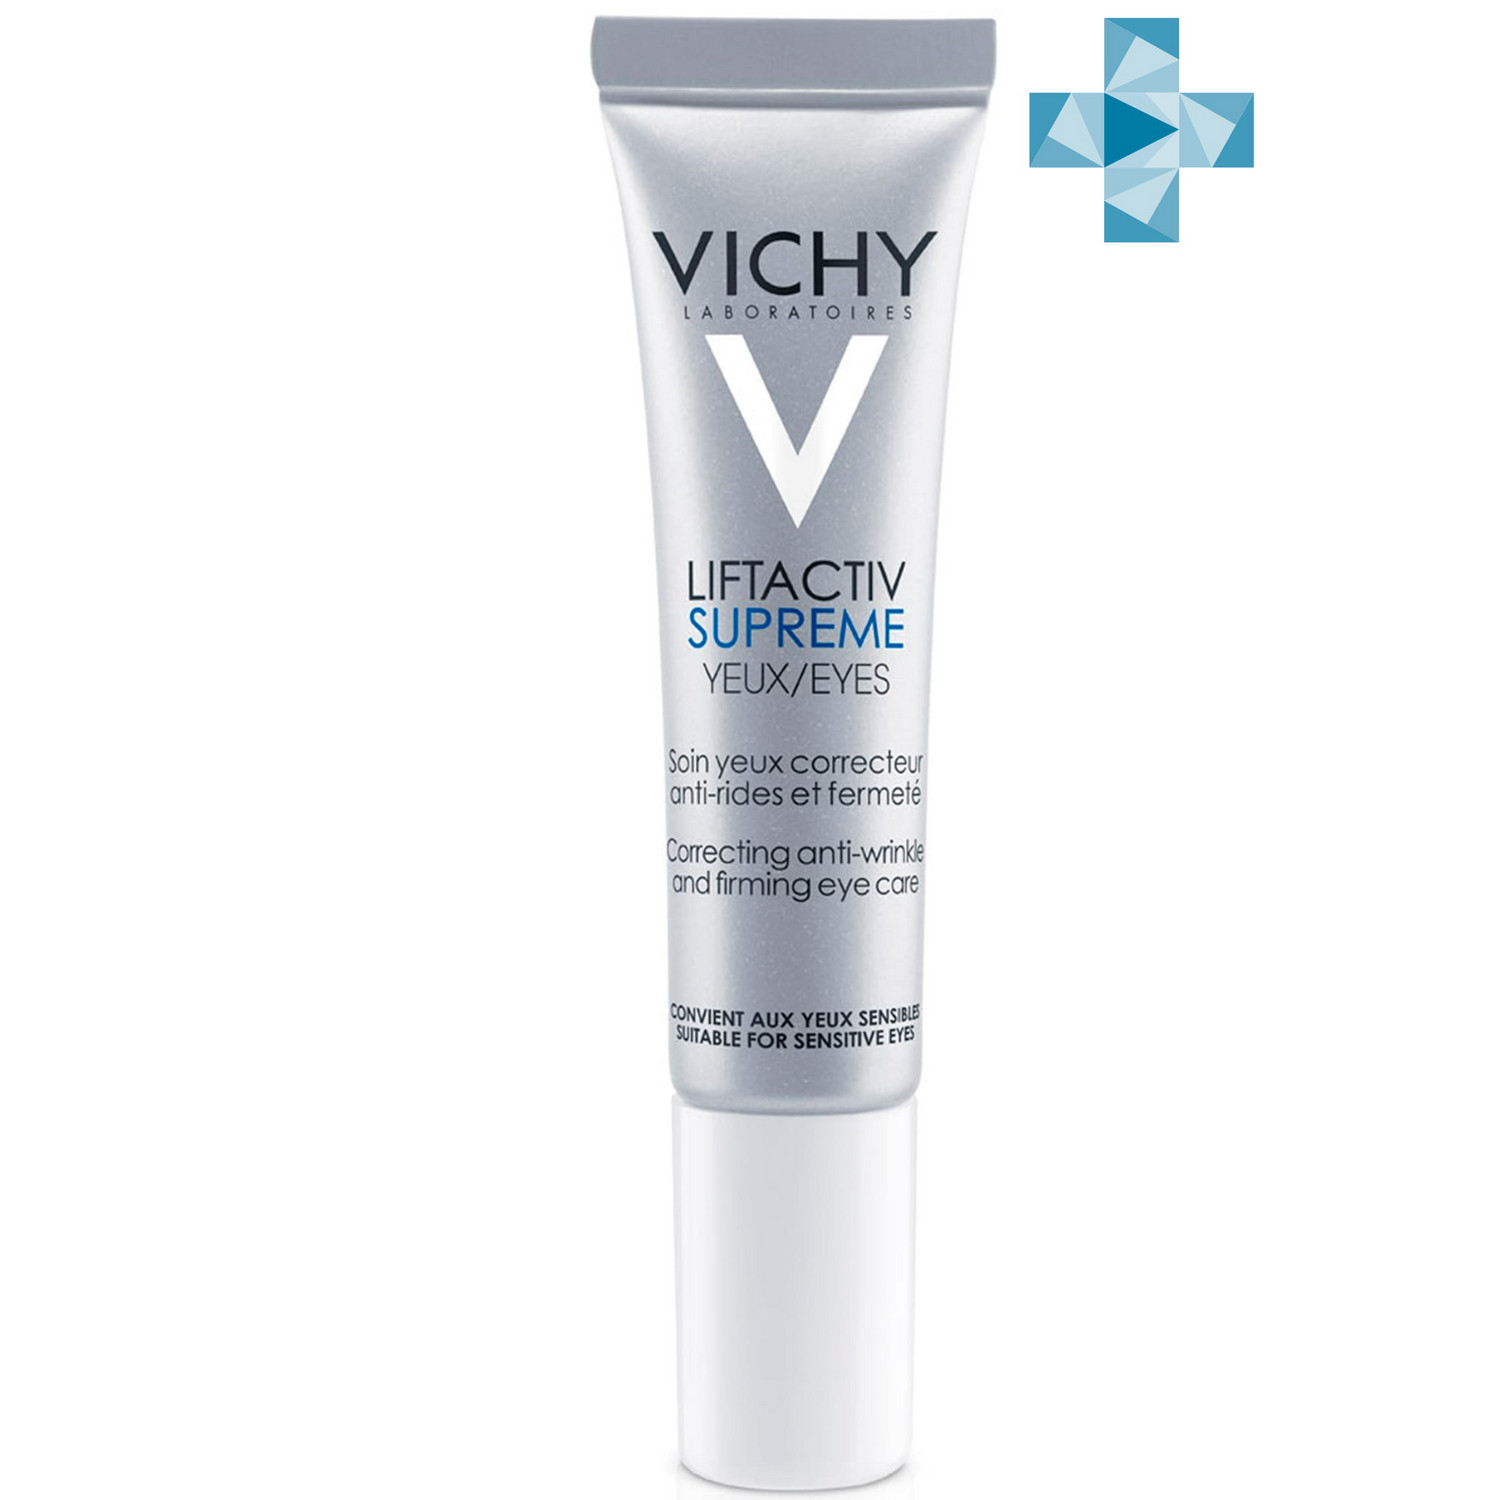 Vichy Supreme Антивозрастной крем-уход для кожи вокруг глаз, 15 мл (Vichy, Liftactiv)